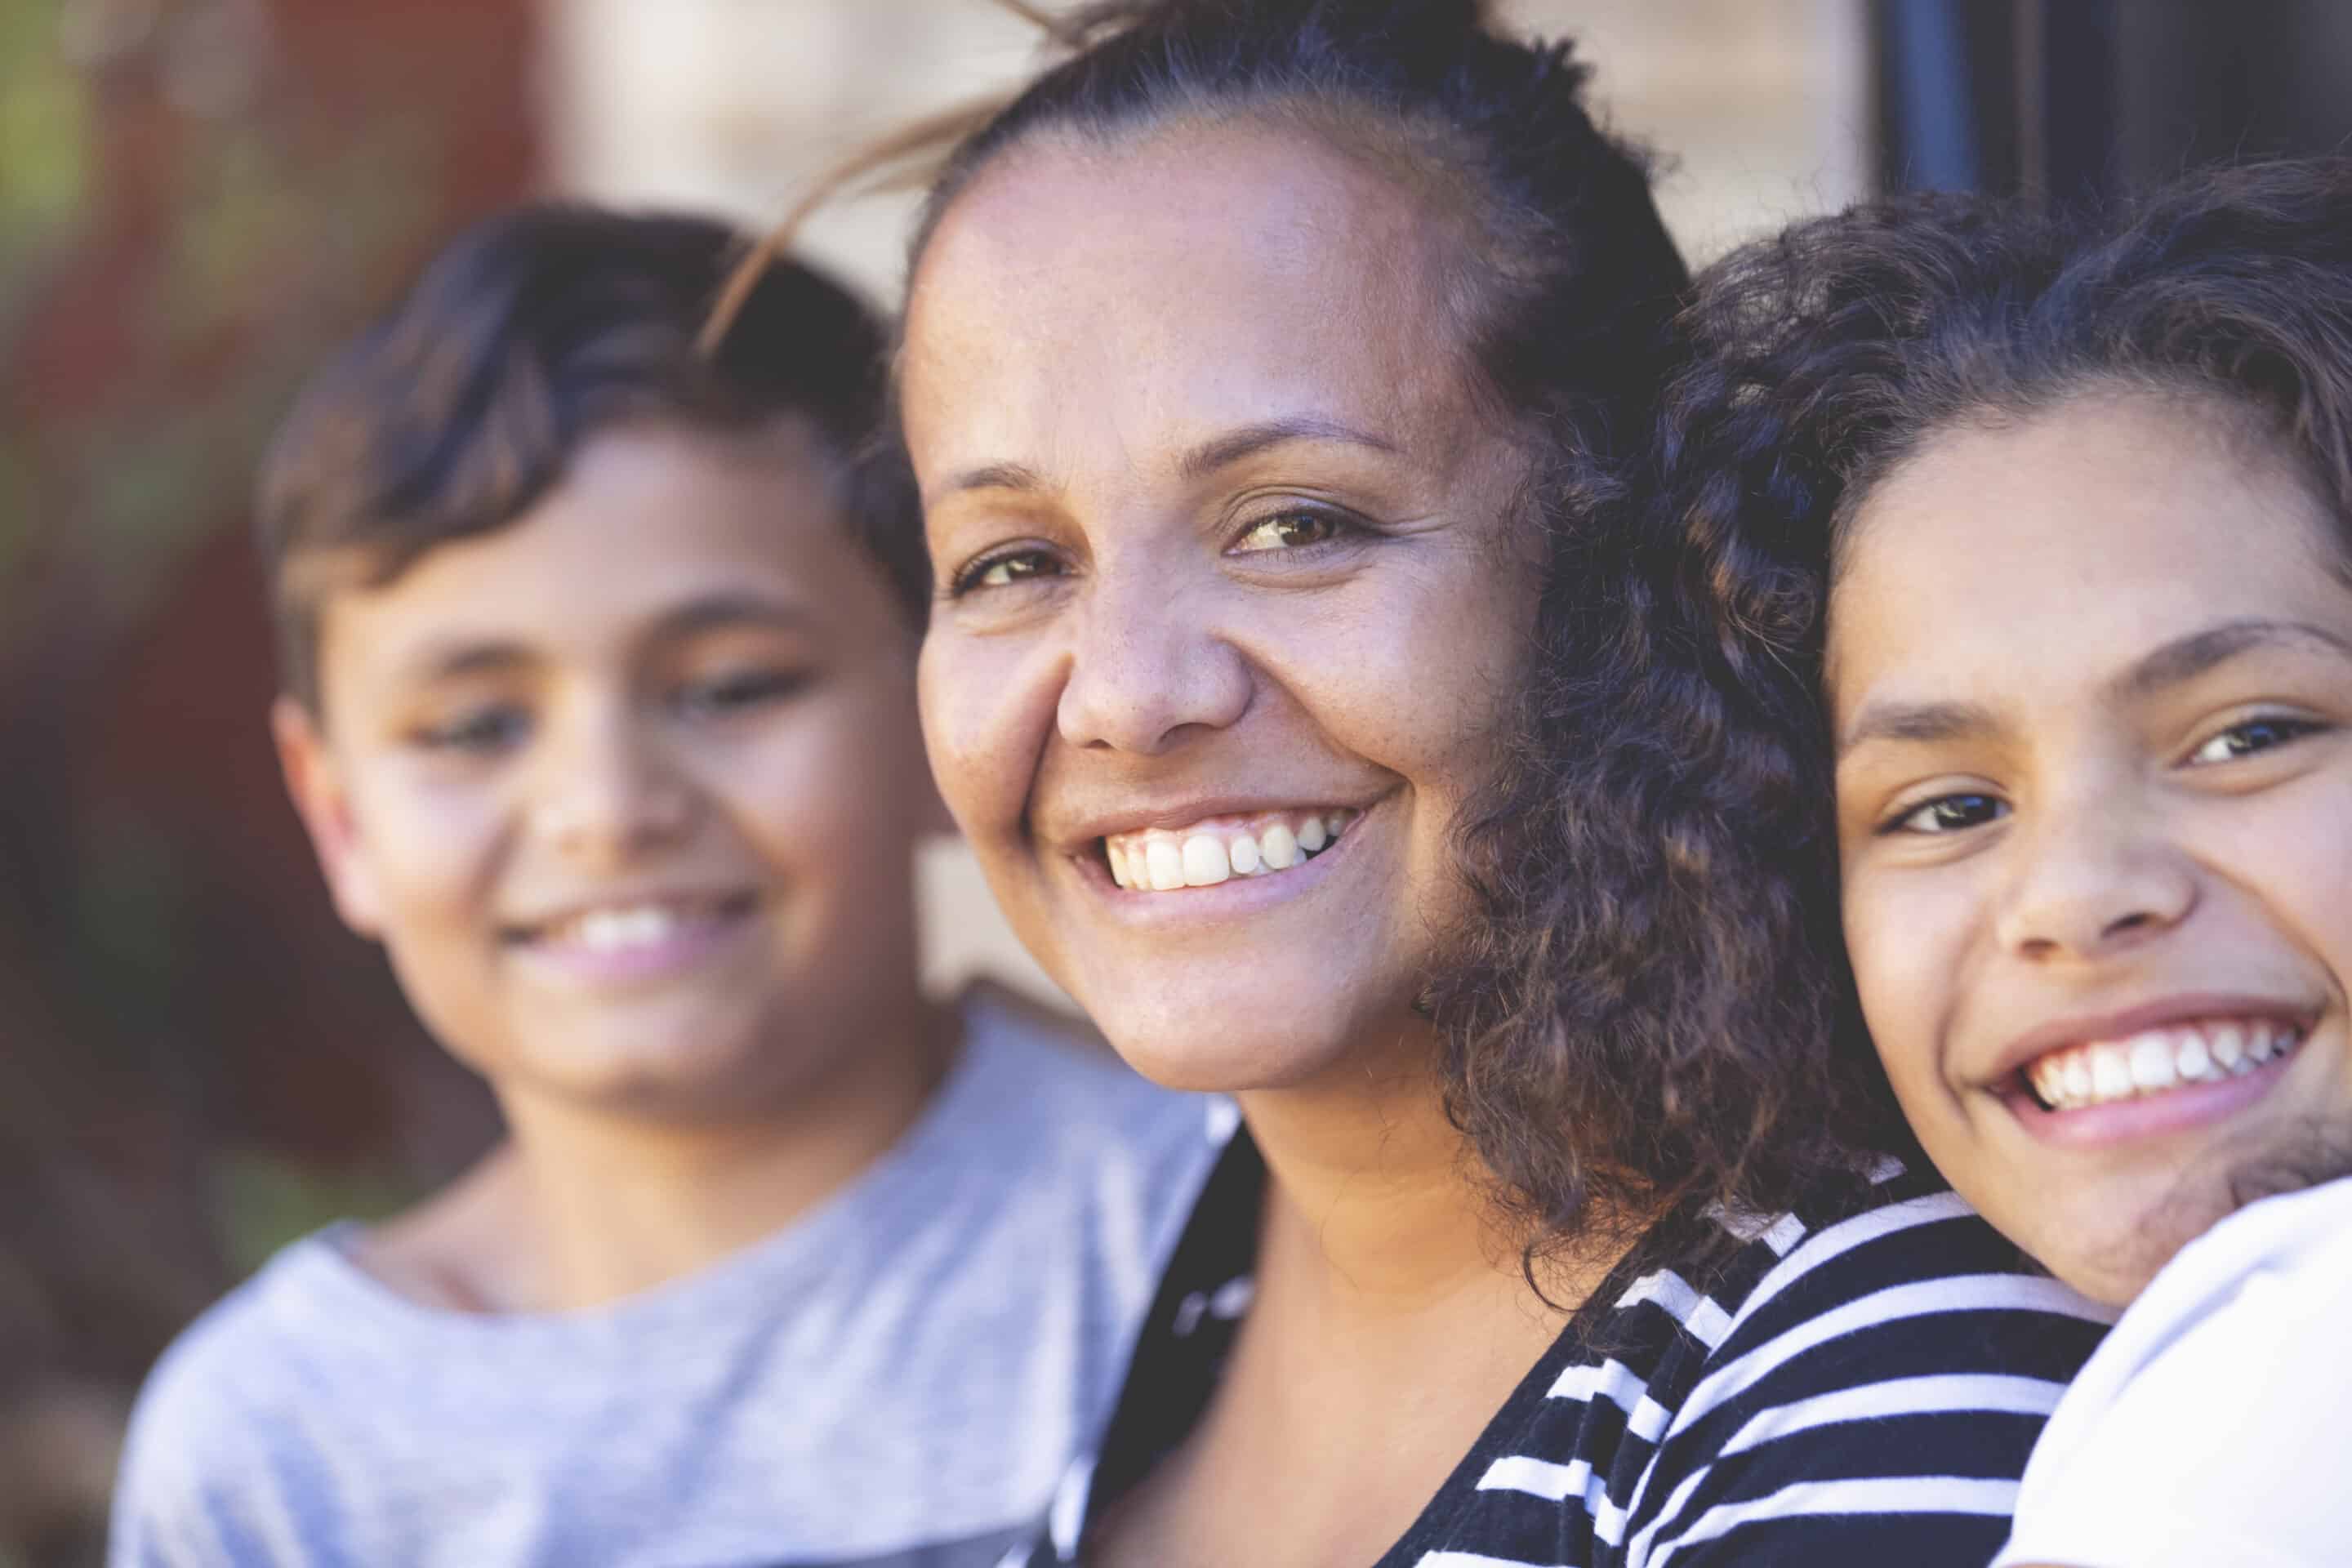 Aboriginal Family Portrait With 1 Parent And 2 Children.